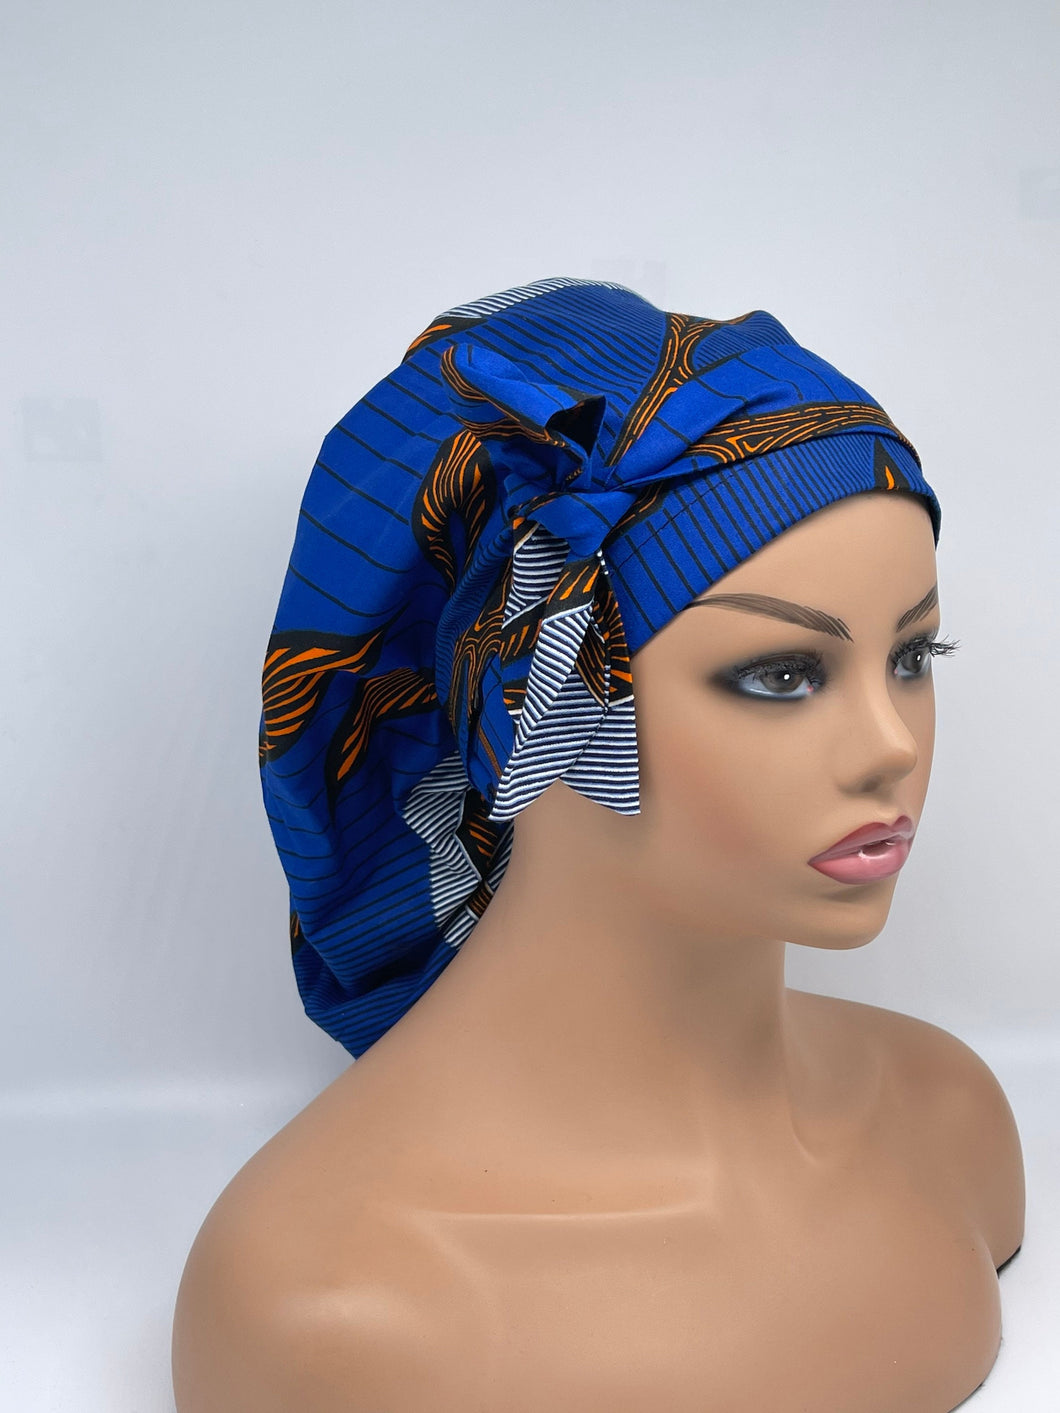 Adjustable Ankara PONY SCRUB CAP, cotton fabric surgical scrub hat royal blue, orange nursing and satin lining option for locs /Long Hair